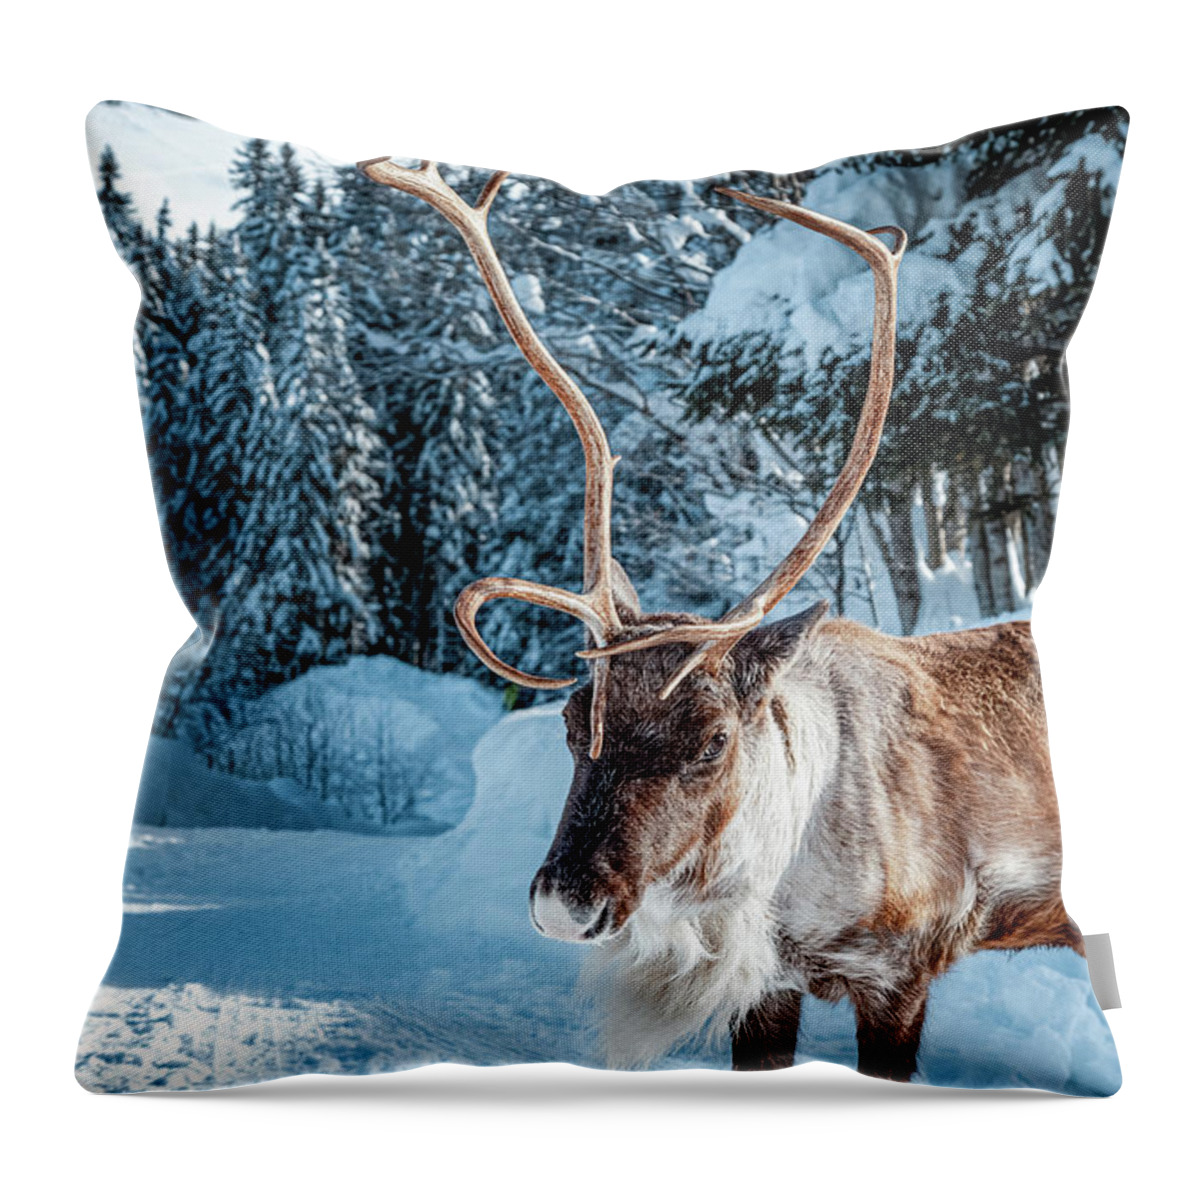 Geneva Throw Pillow featuring the photograph A reindeer walks on a snowy road by Benoit Bruchez